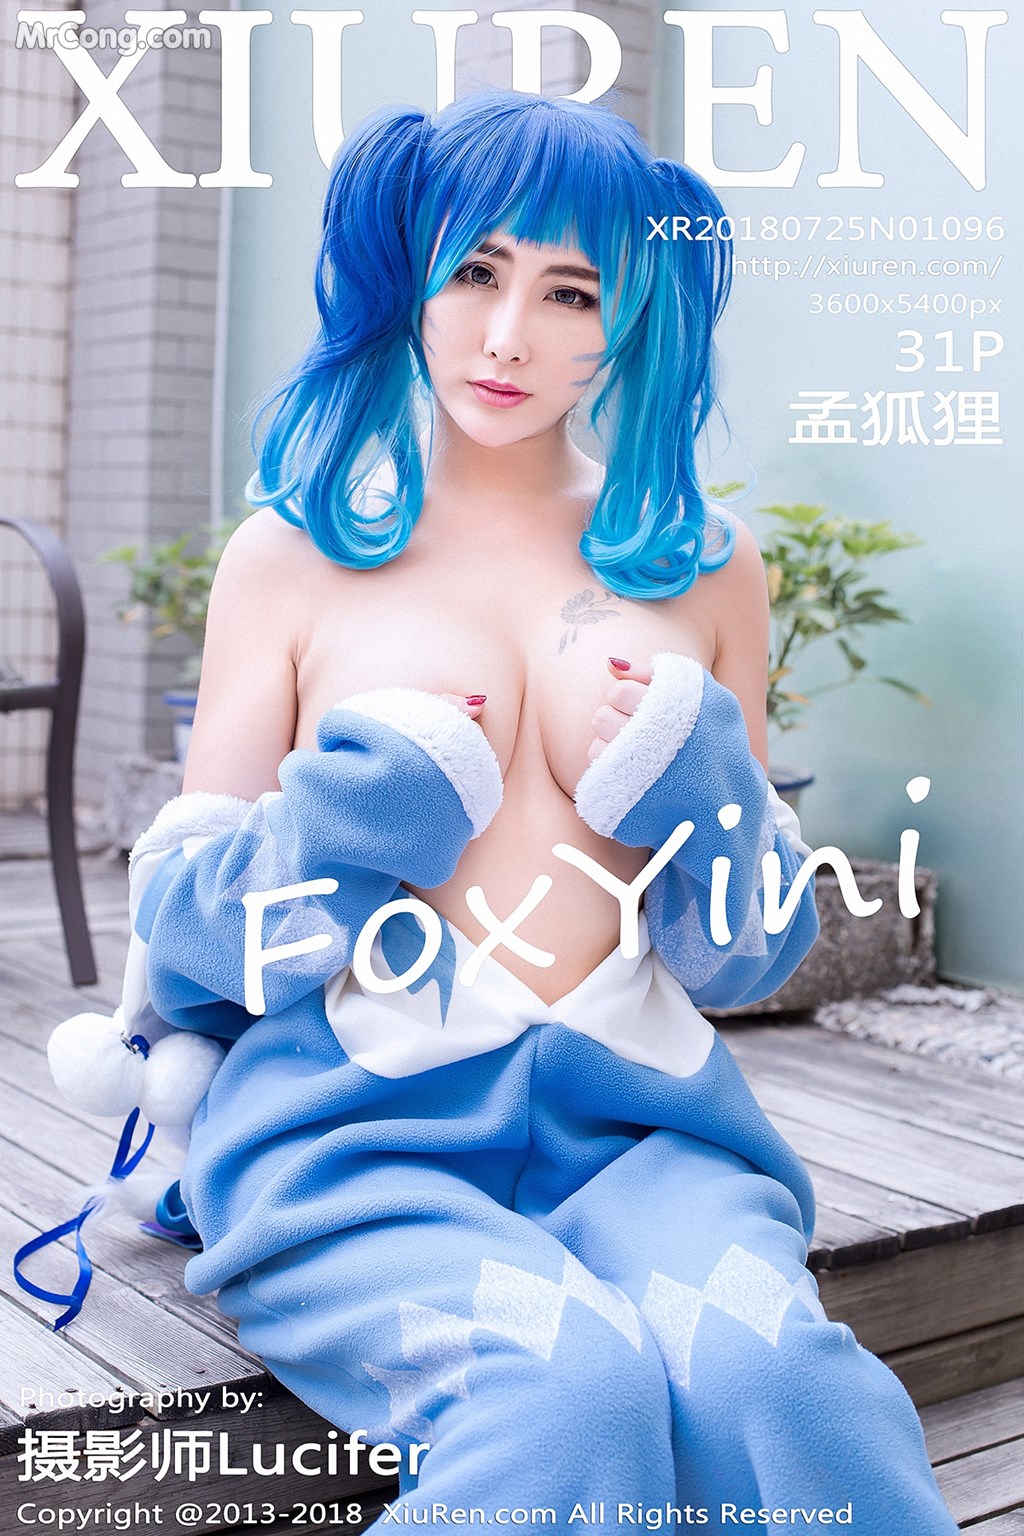 XIUREN No. 1096: FoxYini Model (孟 狐狸) (32 photos) photo 1-0